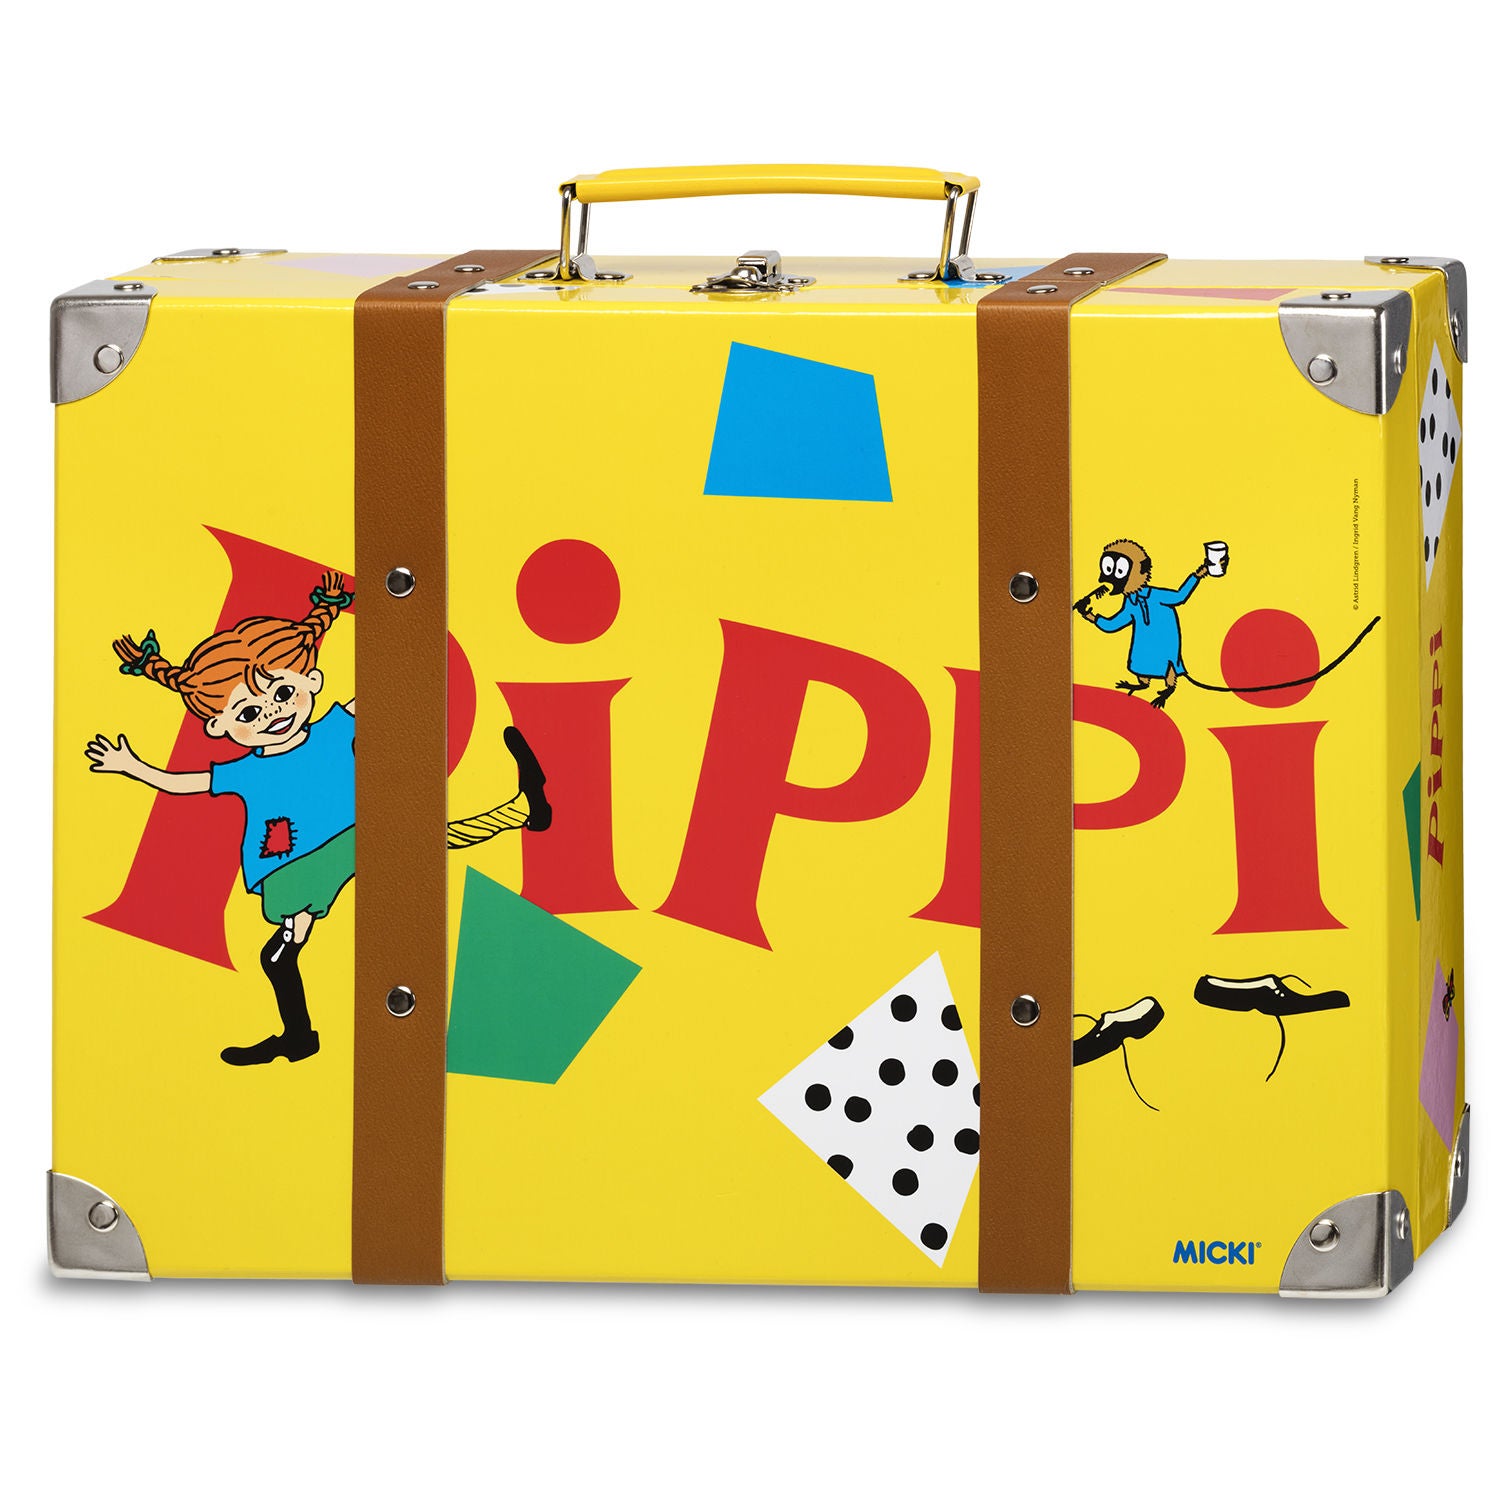 Pippi Koffer 32 cm, Gelb von Pippi Langstrumpf